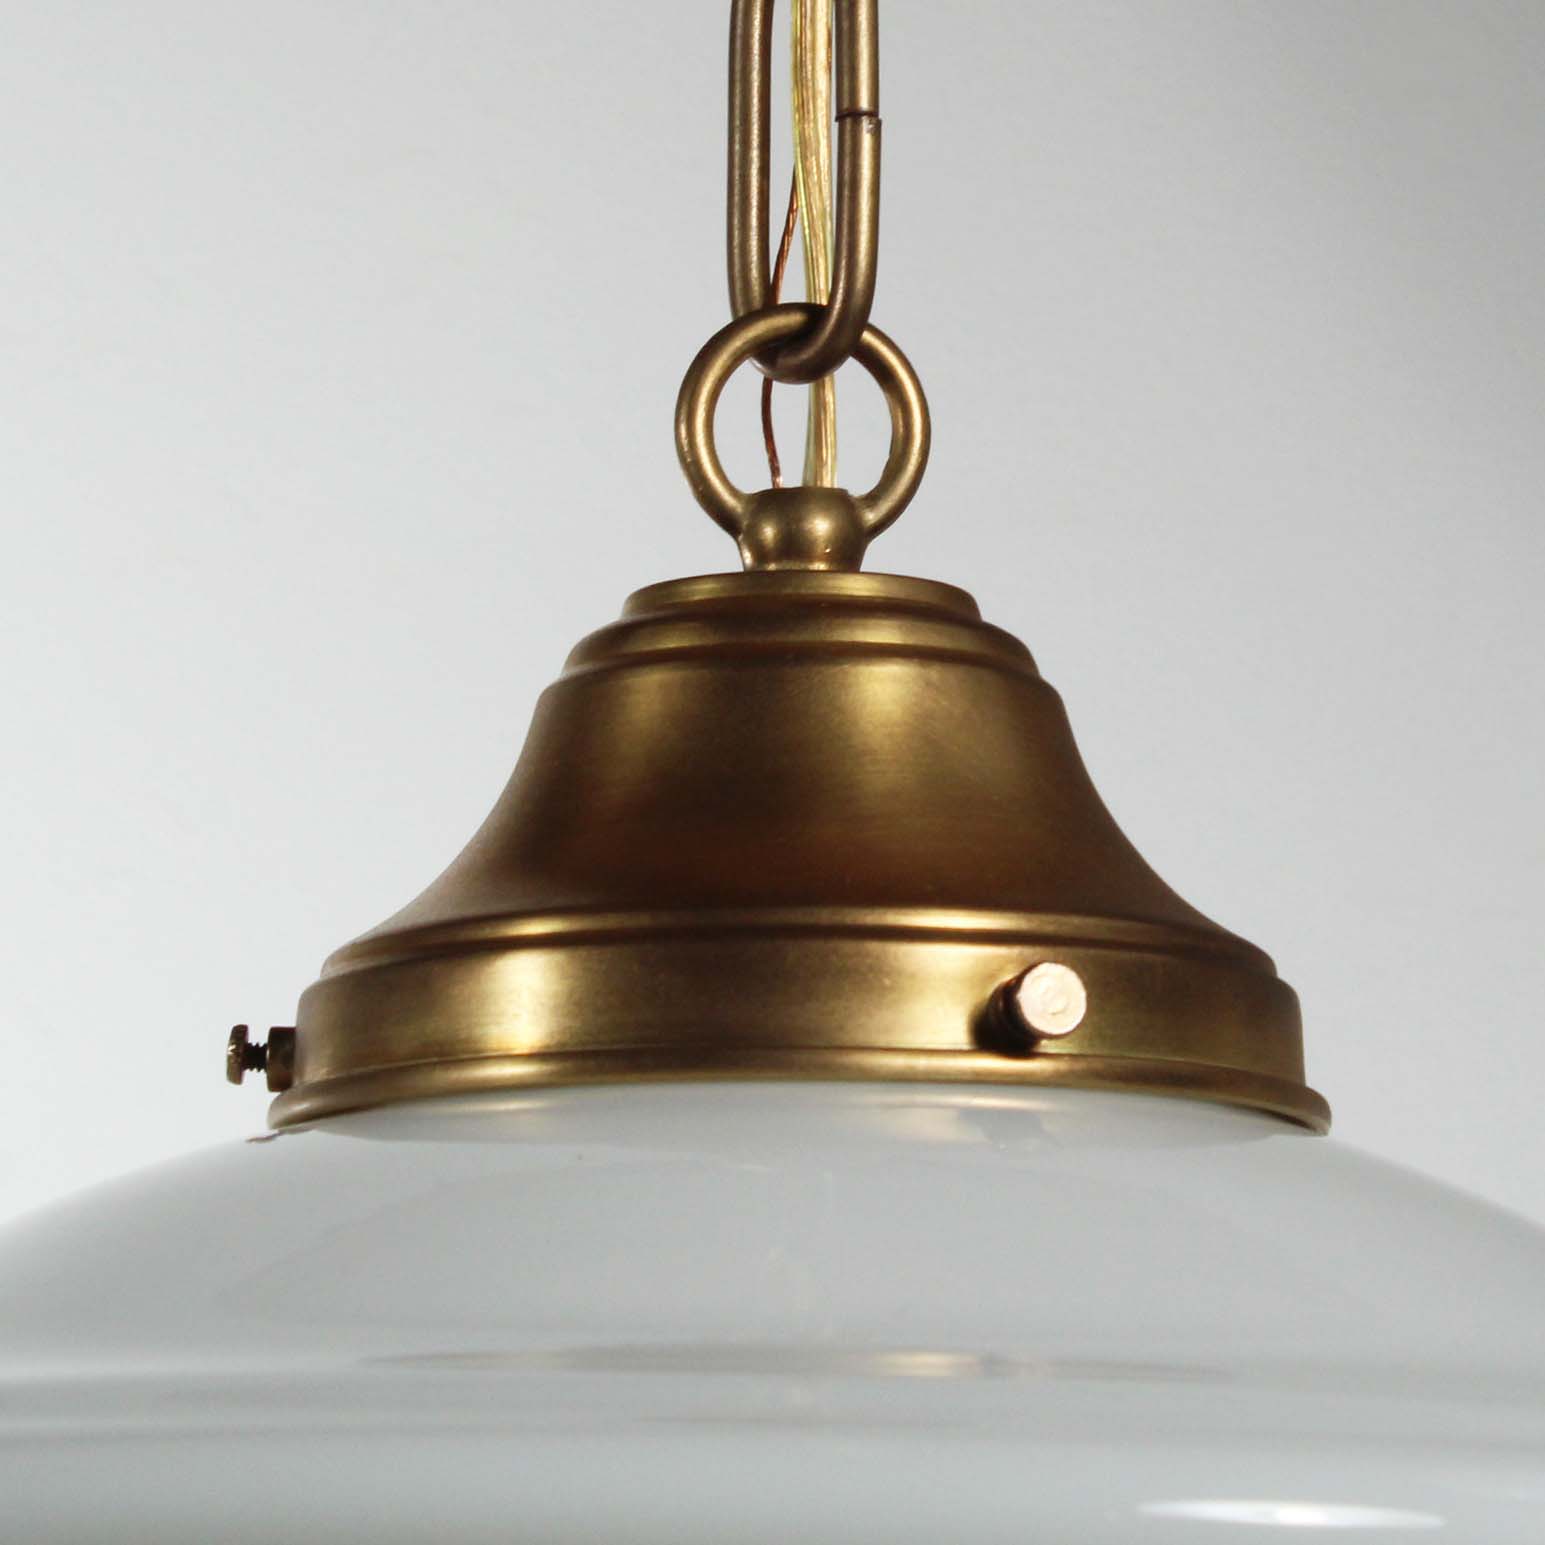 Matching Brass Schoolhouse Pendant Lights, Antique Lighting-72367